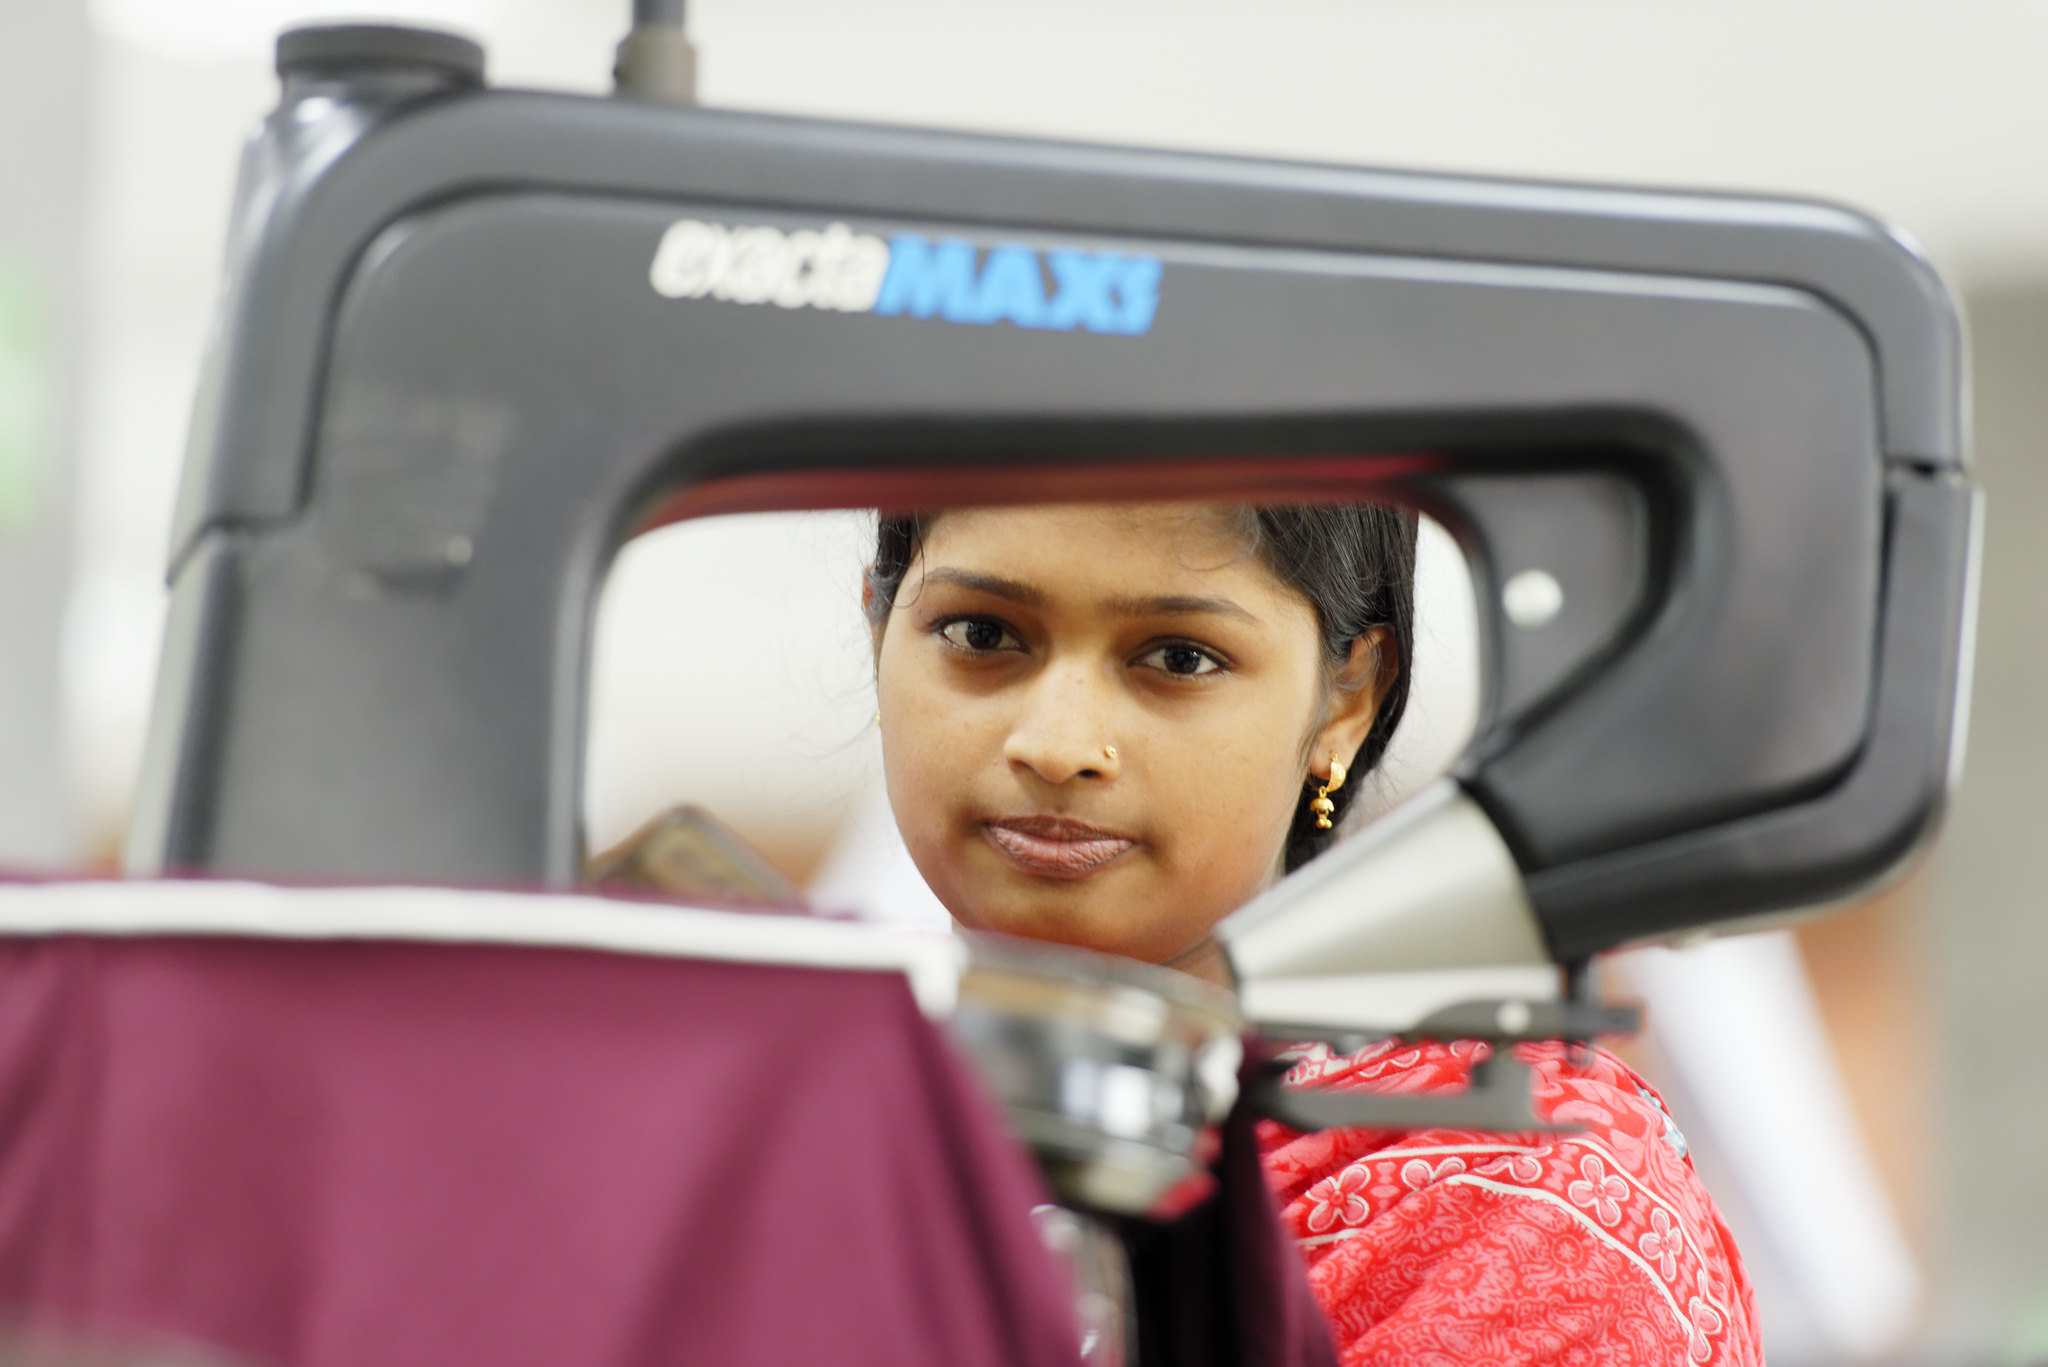 A young Bangladeshi woman wearing red sits behind a sewing machine.